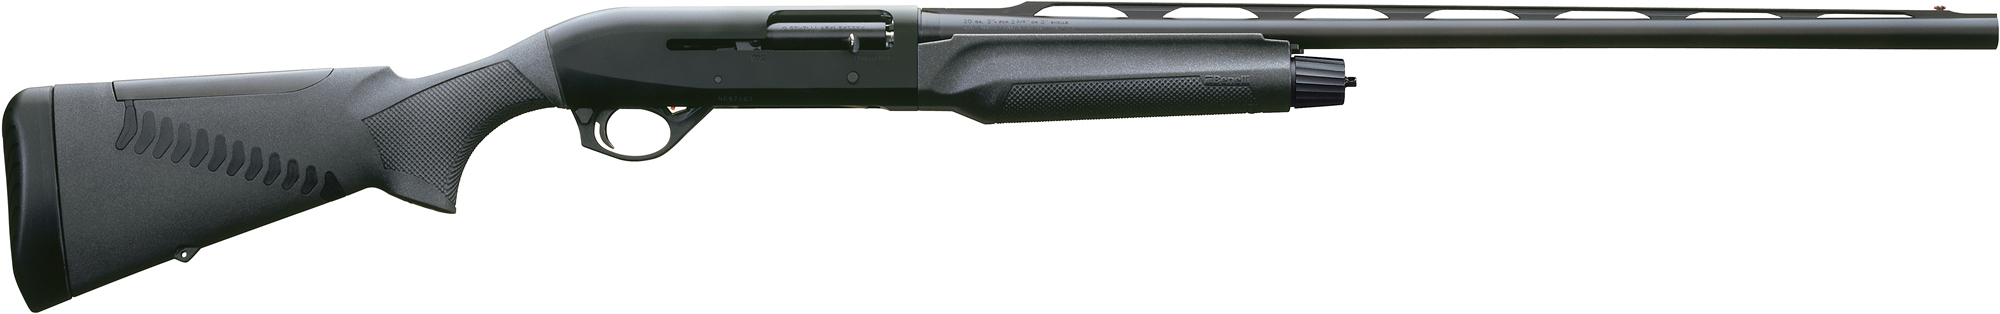 Benelli M2 Field w/ComforTech Semi-Auto Shotgun 11026, 12 Gauge, 21", 3" Chmbr, Synthetic Stock, Matte Finish